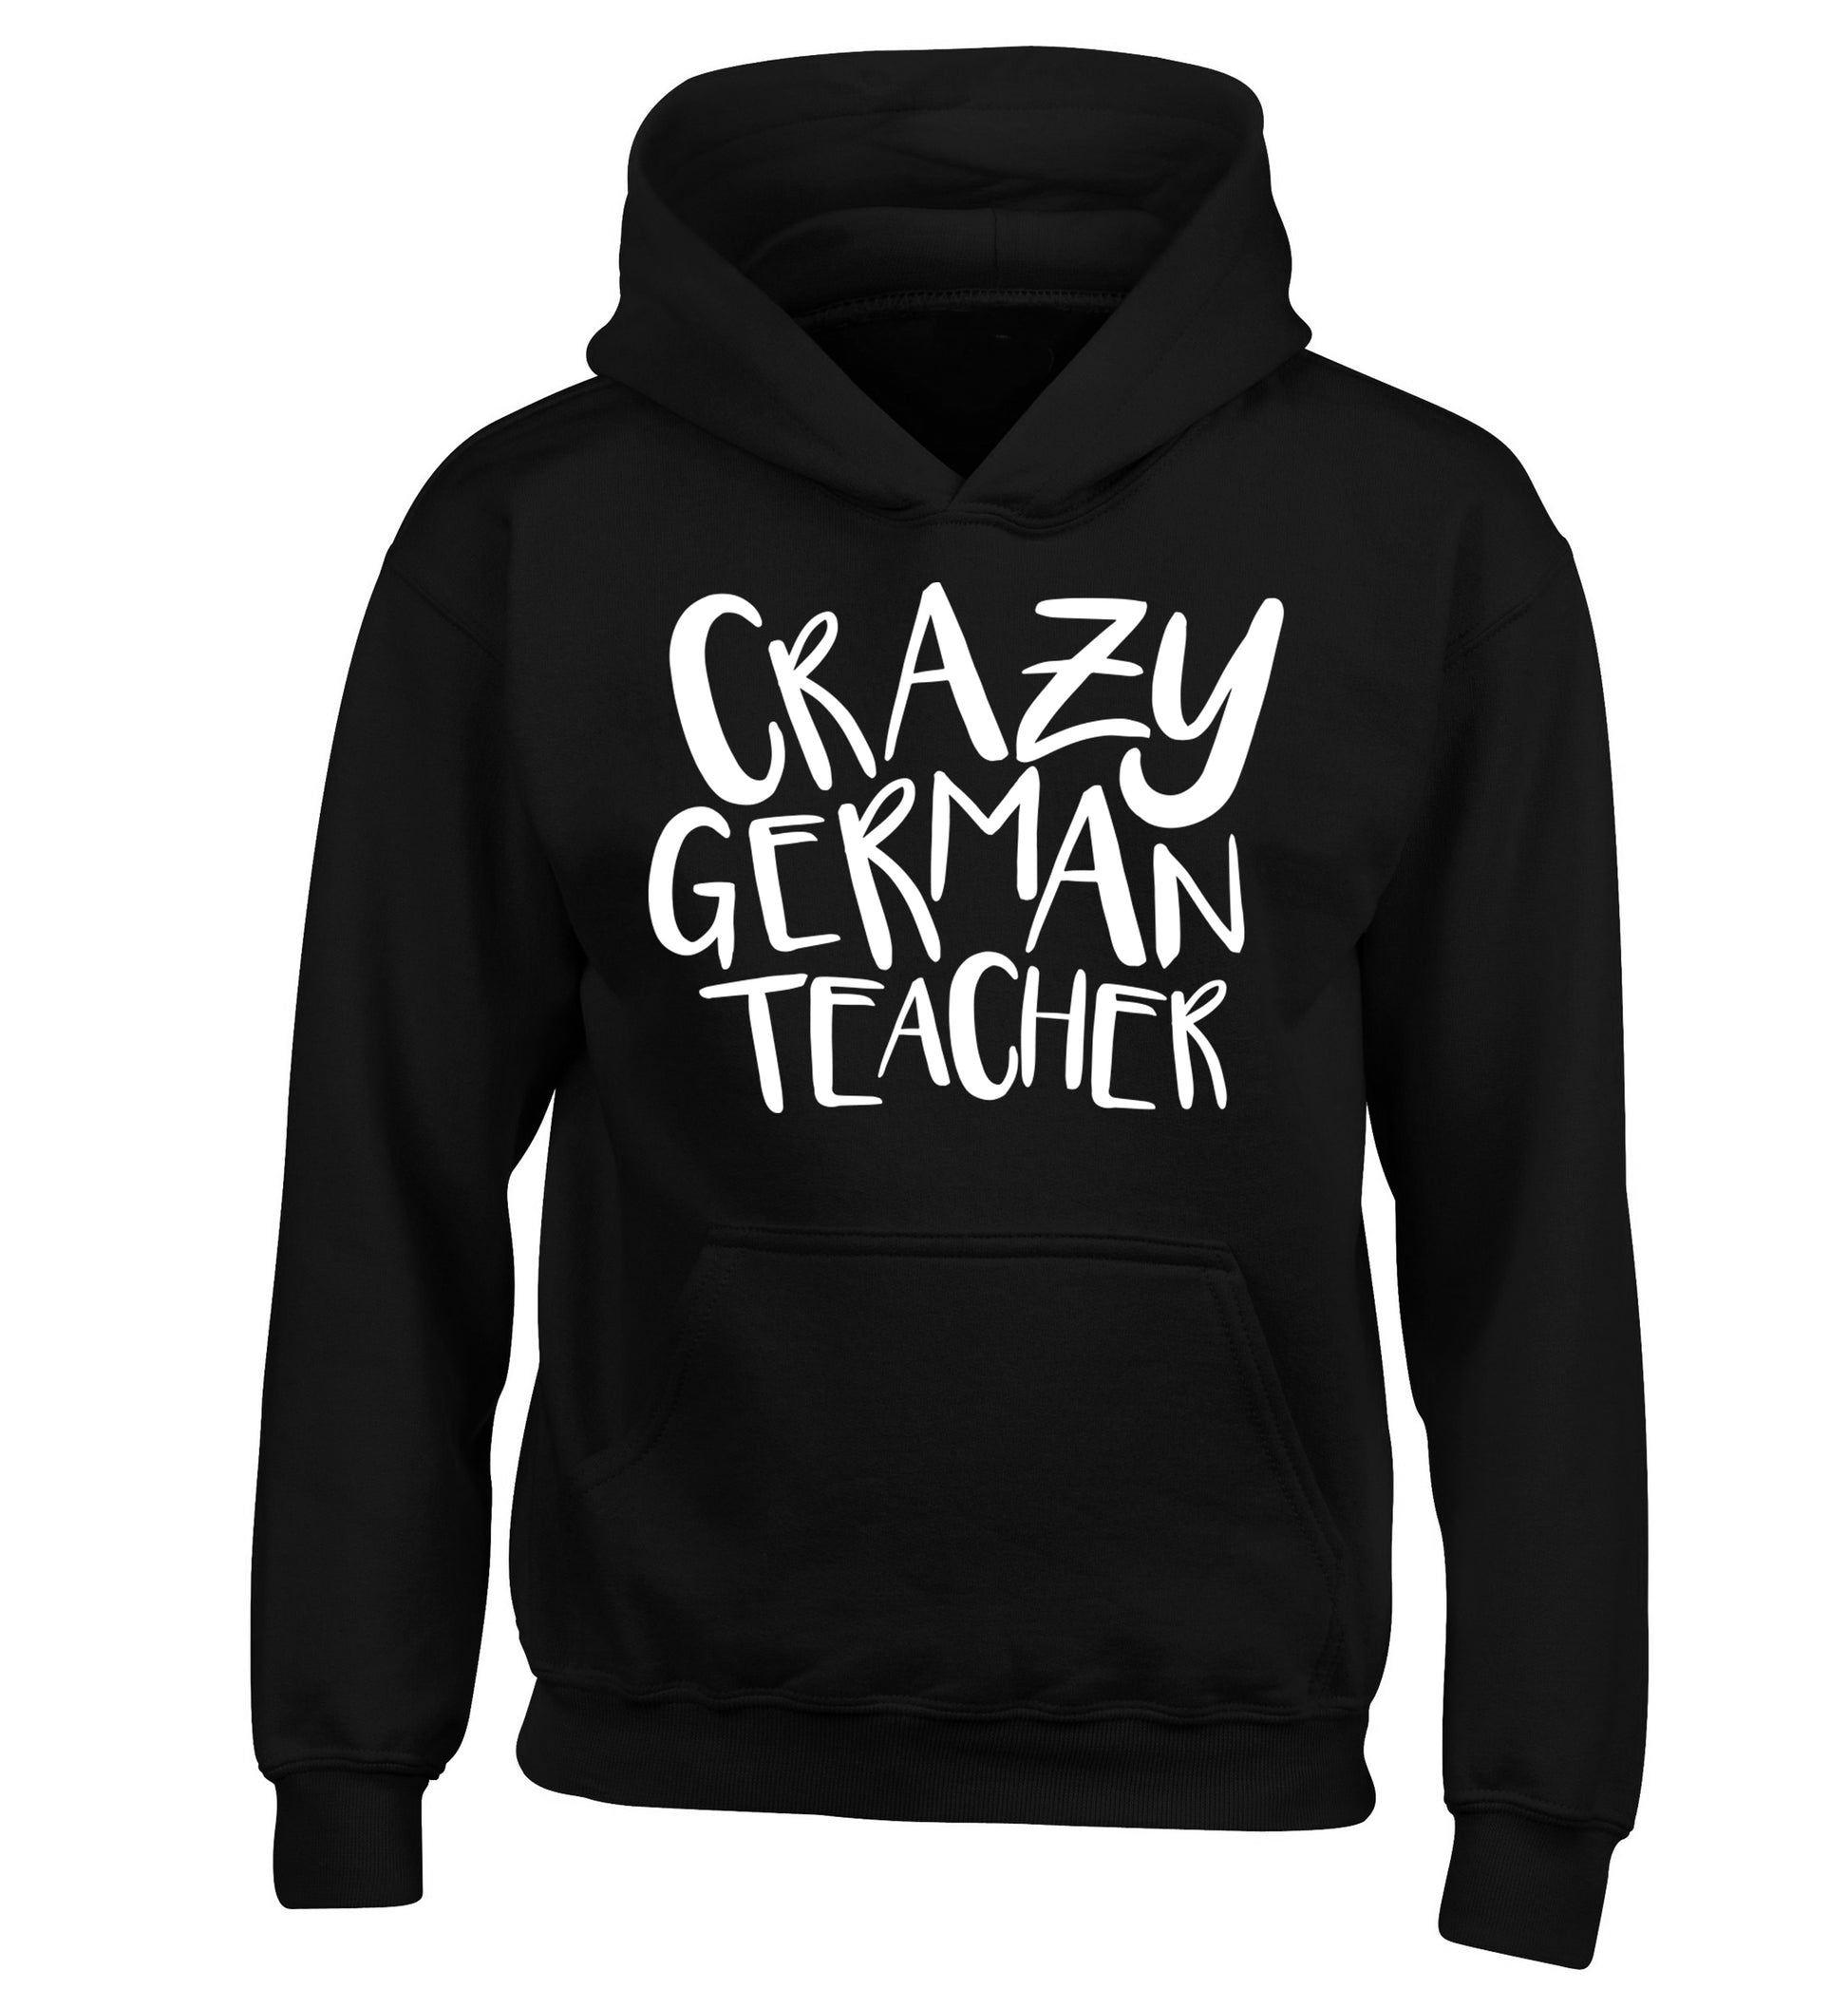 Crazy german teacher children's black hoodie 12-13 Years